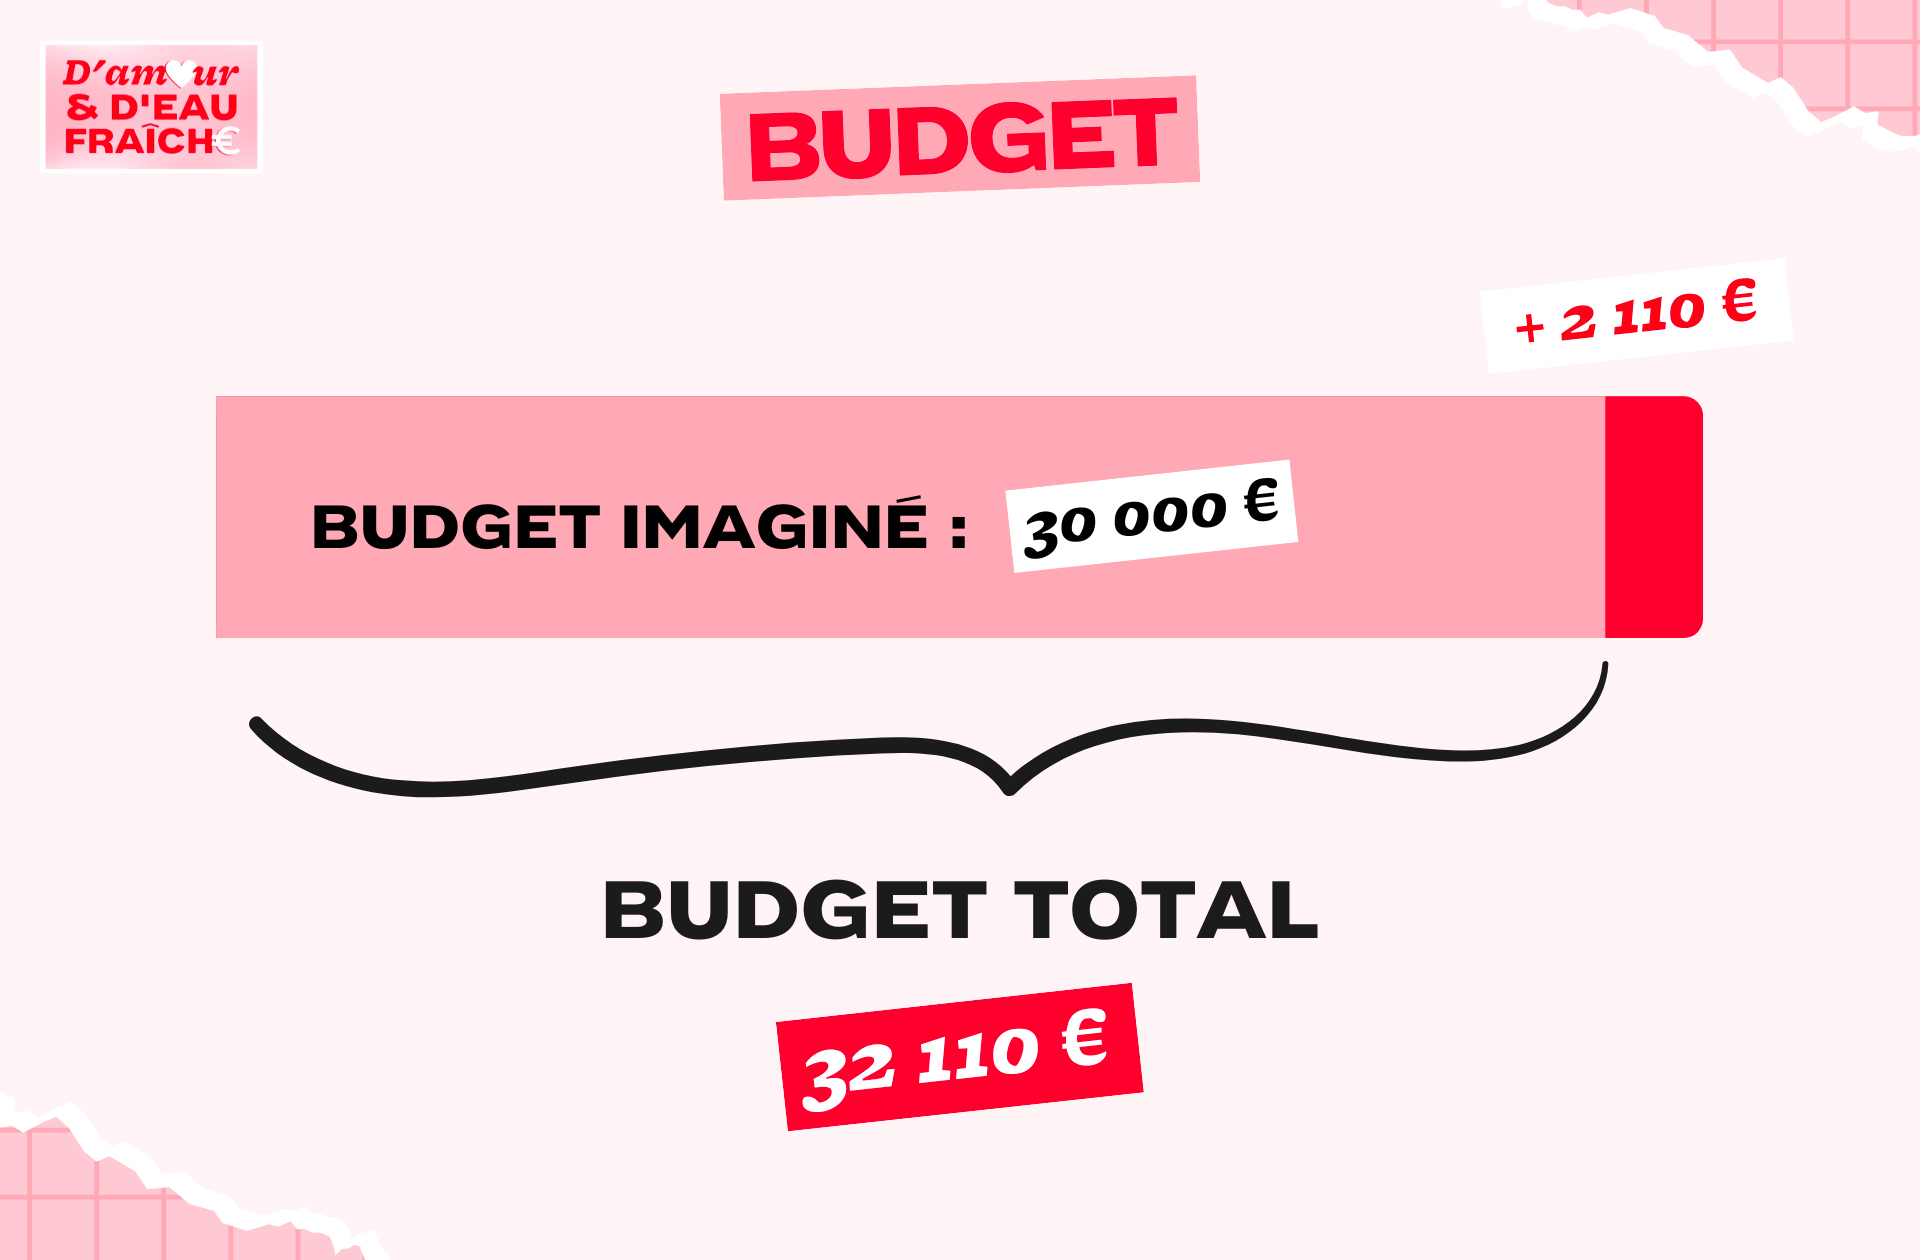 DAEDF_Budget